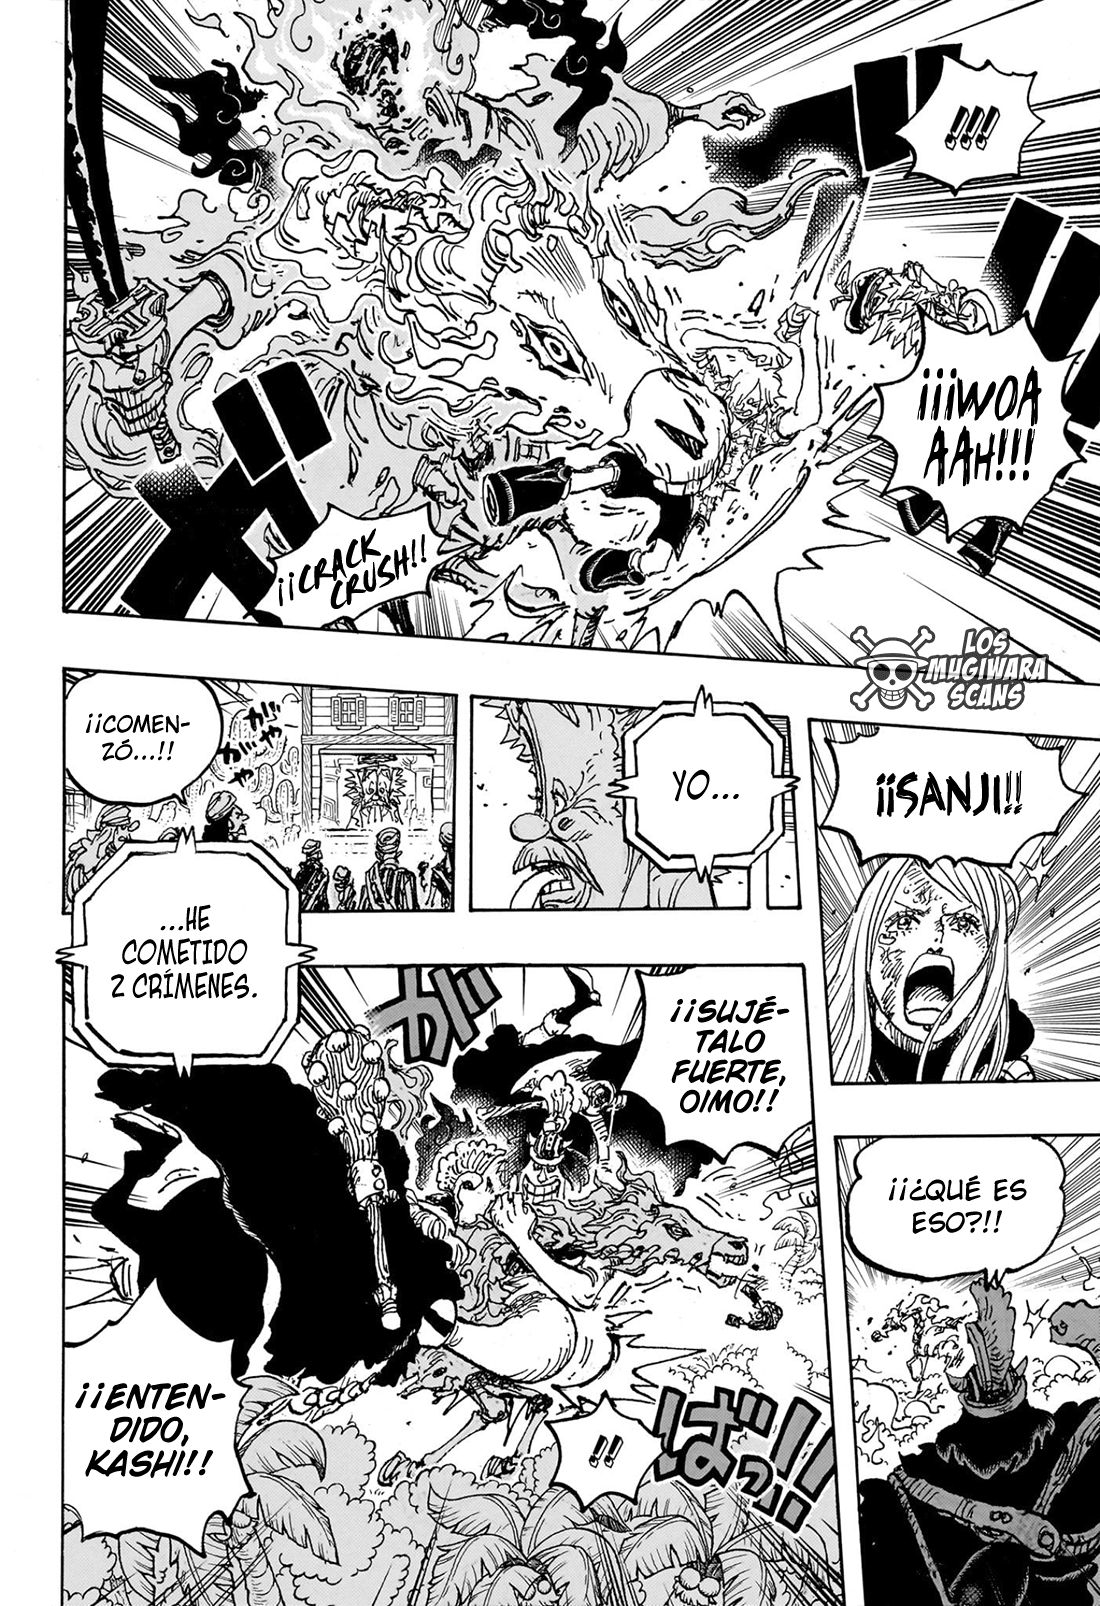 español - One Piece Manga 1113 [Español] 09